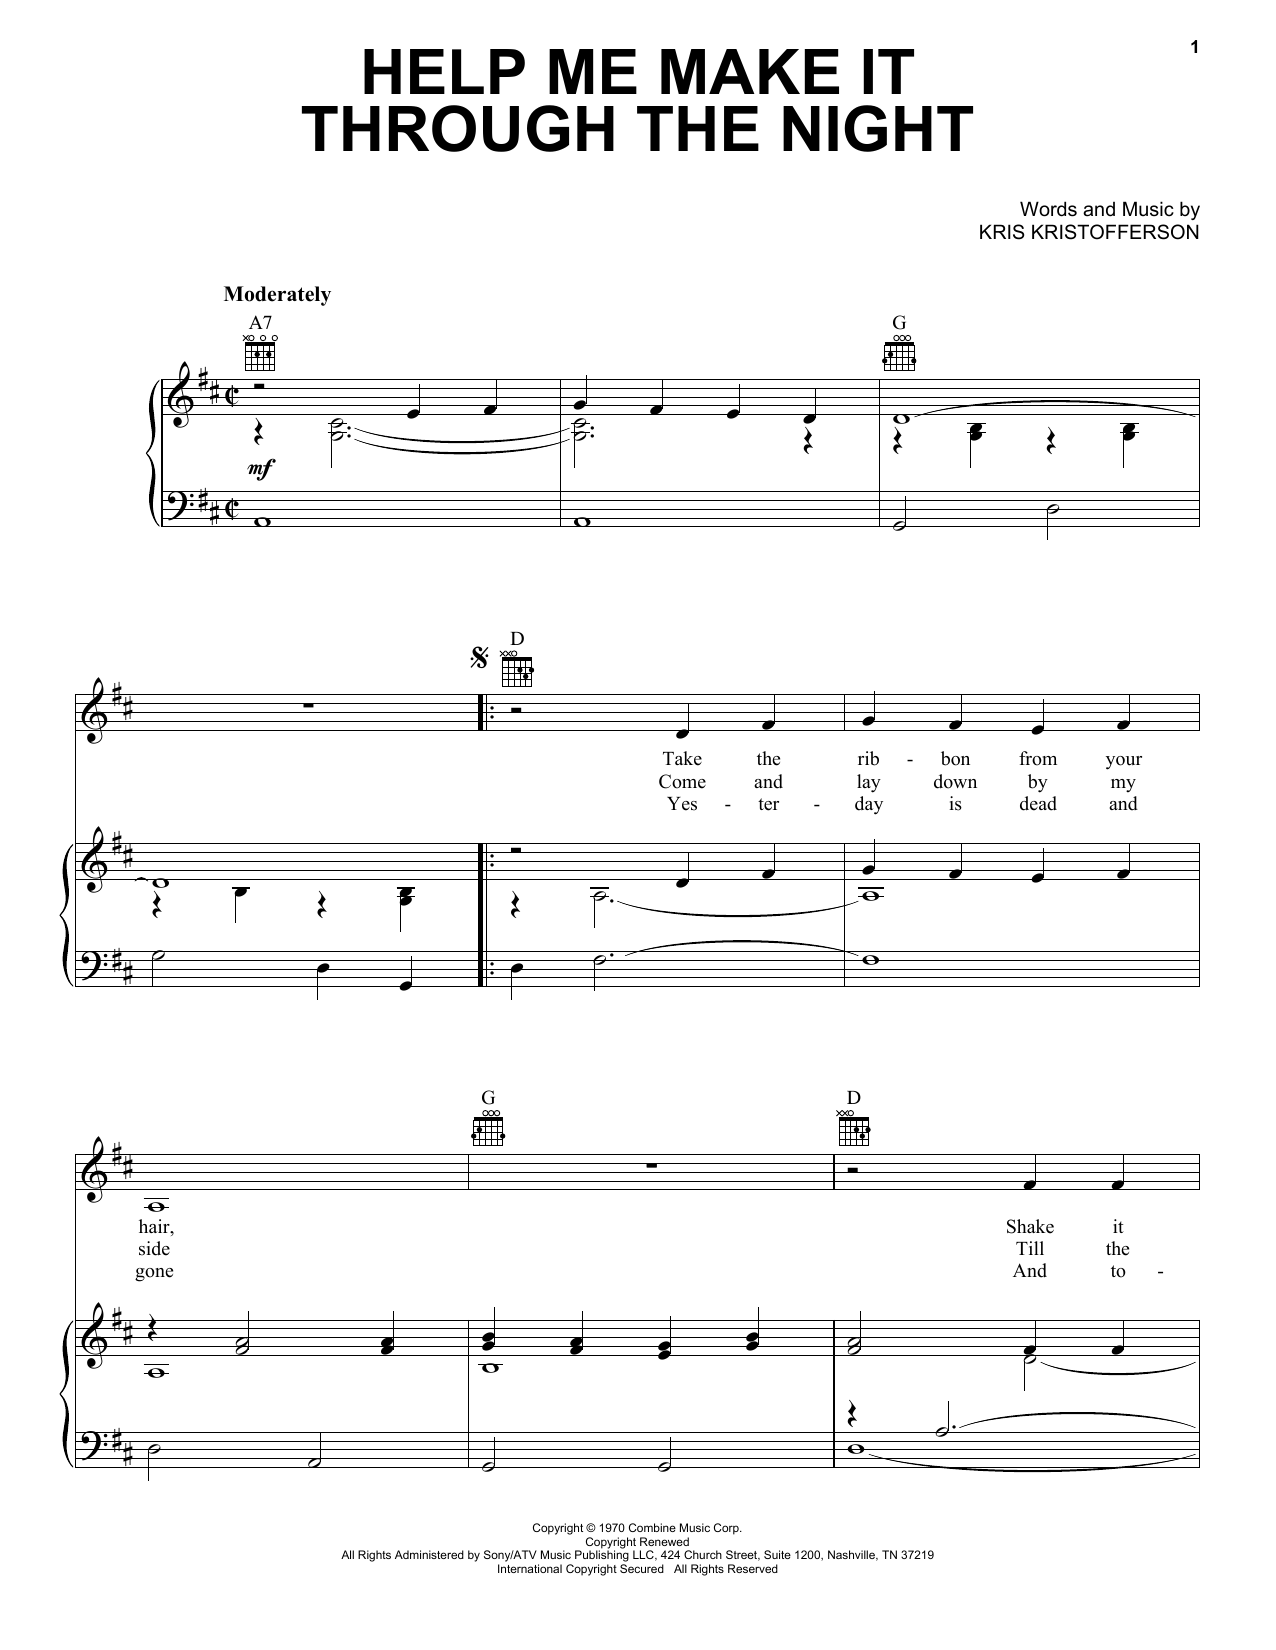 Kris Kristofferson Help Me Make It Through The Night Sheet Music Notes & Chords for Melody Line, Lyrics & Chords - Download or Print PDF